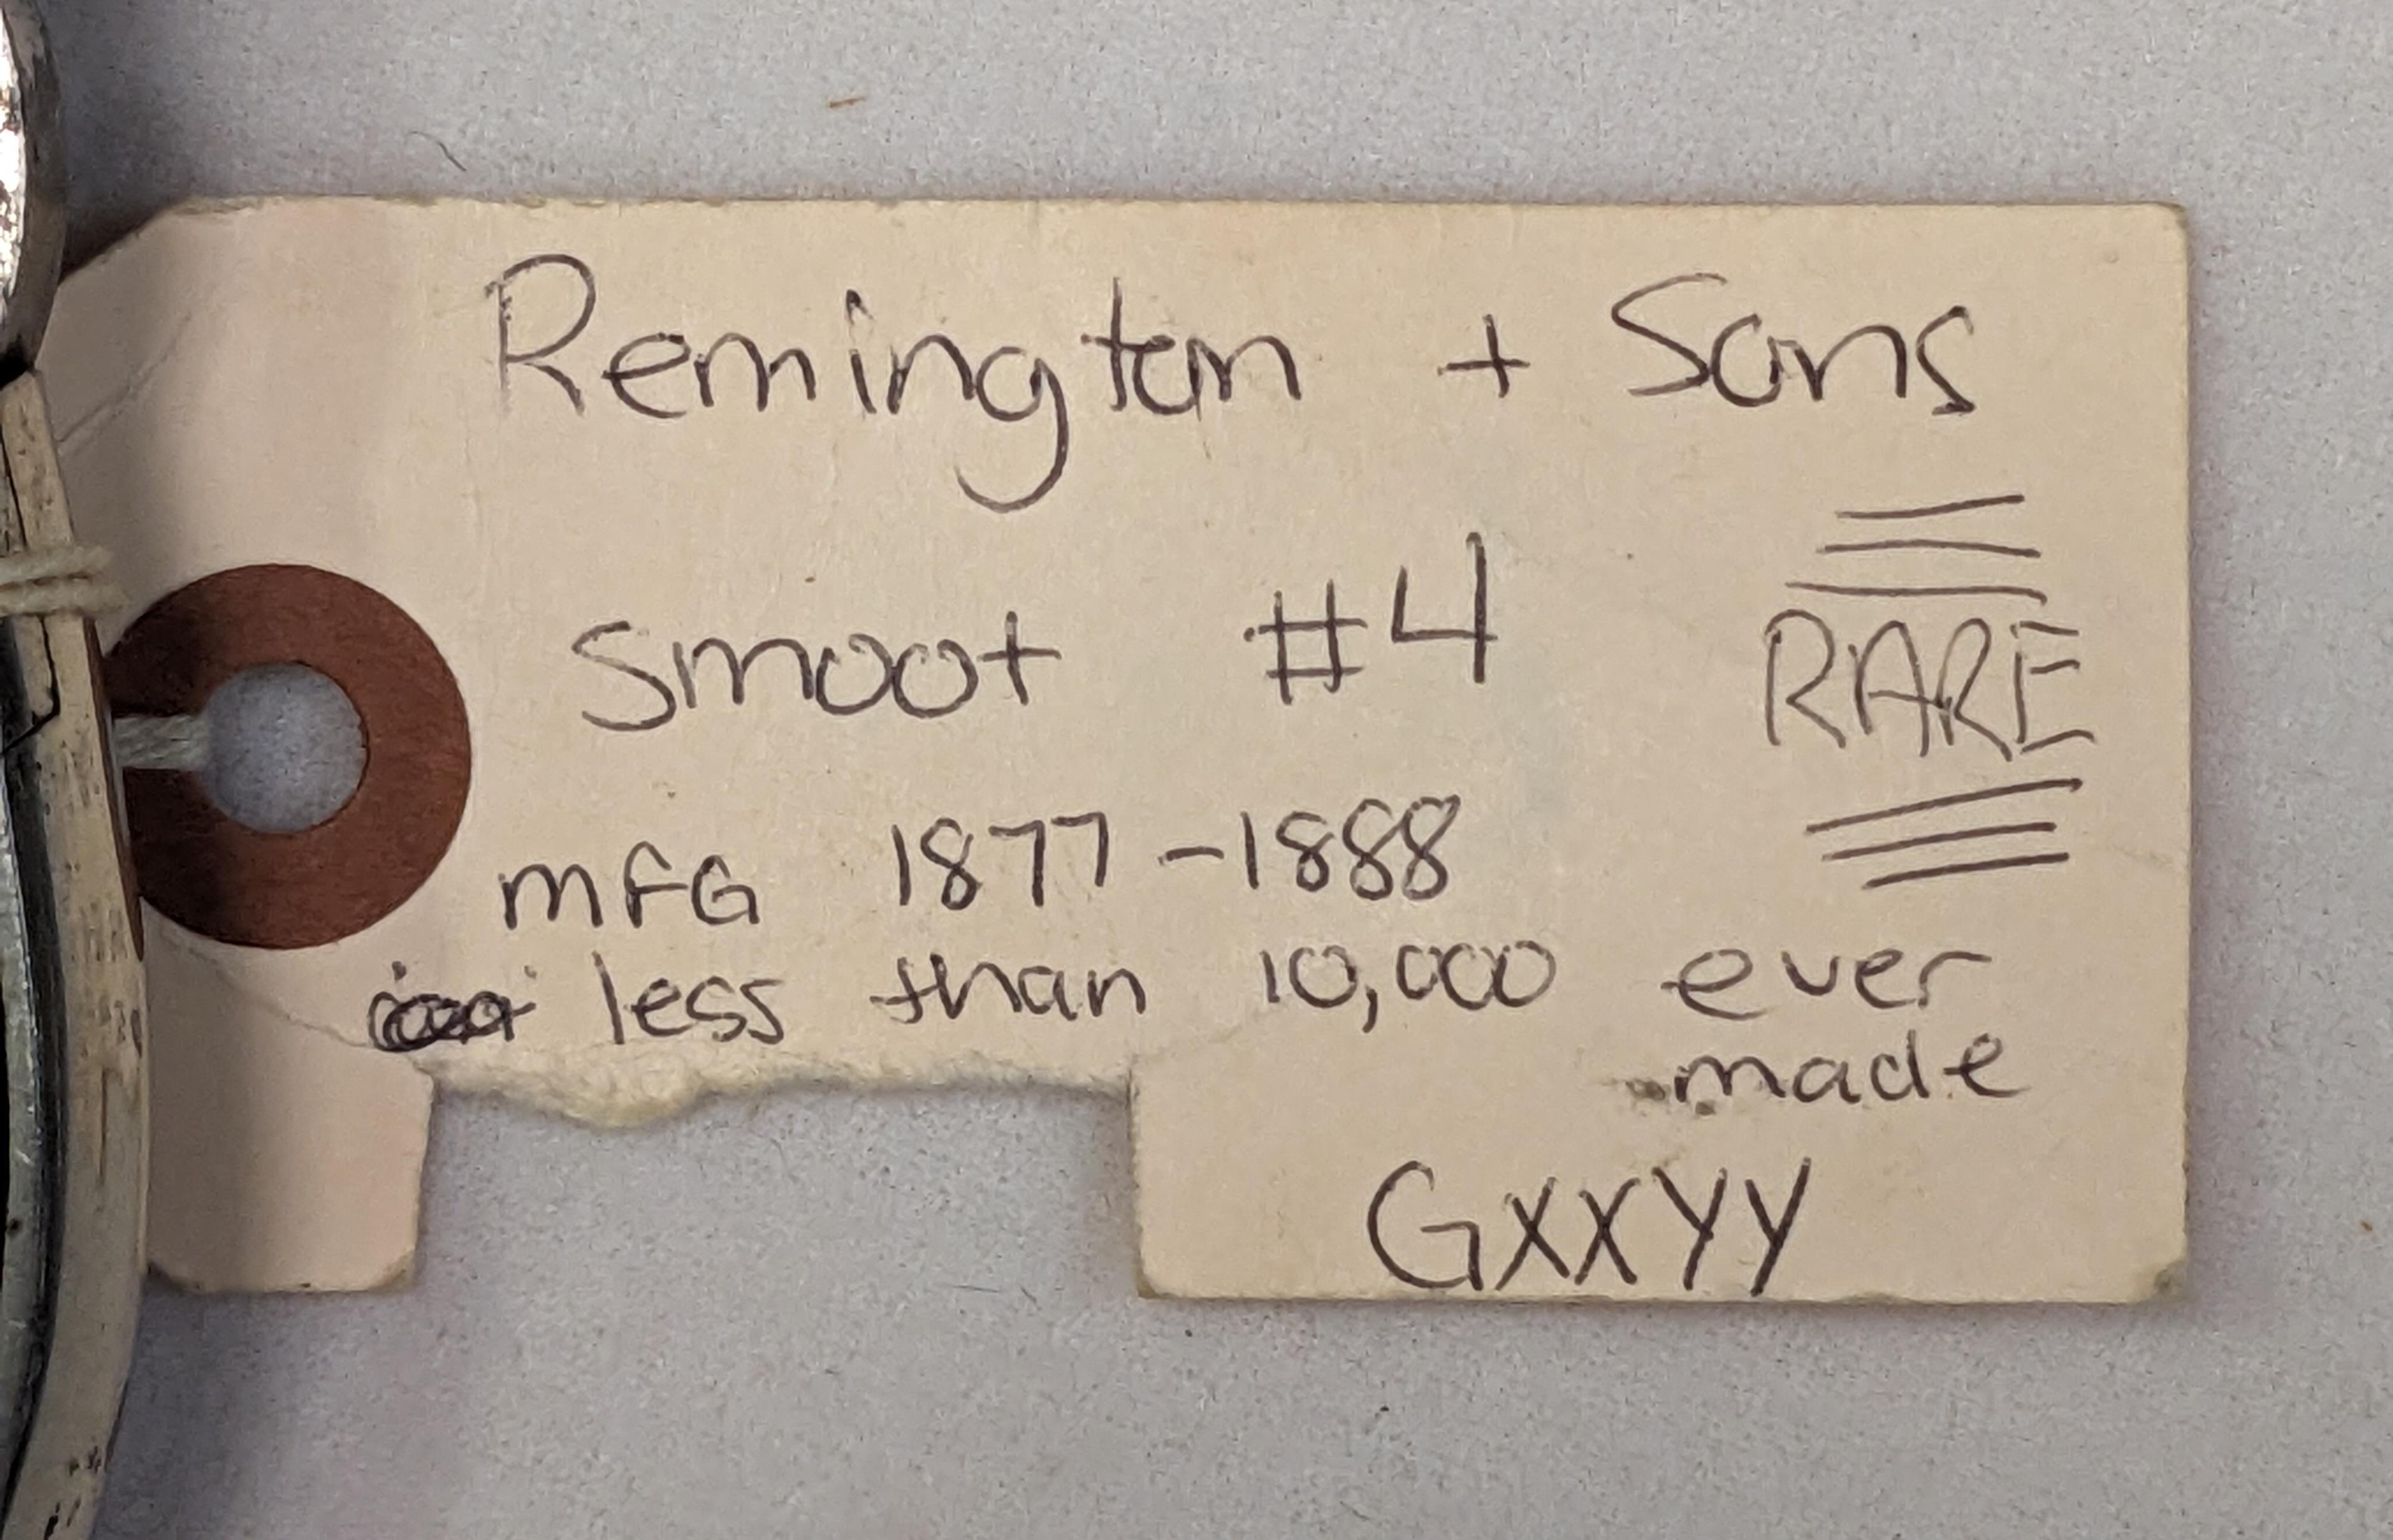 REMINGTON & SONS SMOOT #4  MFG. BETWEEN 1887-1888 .38